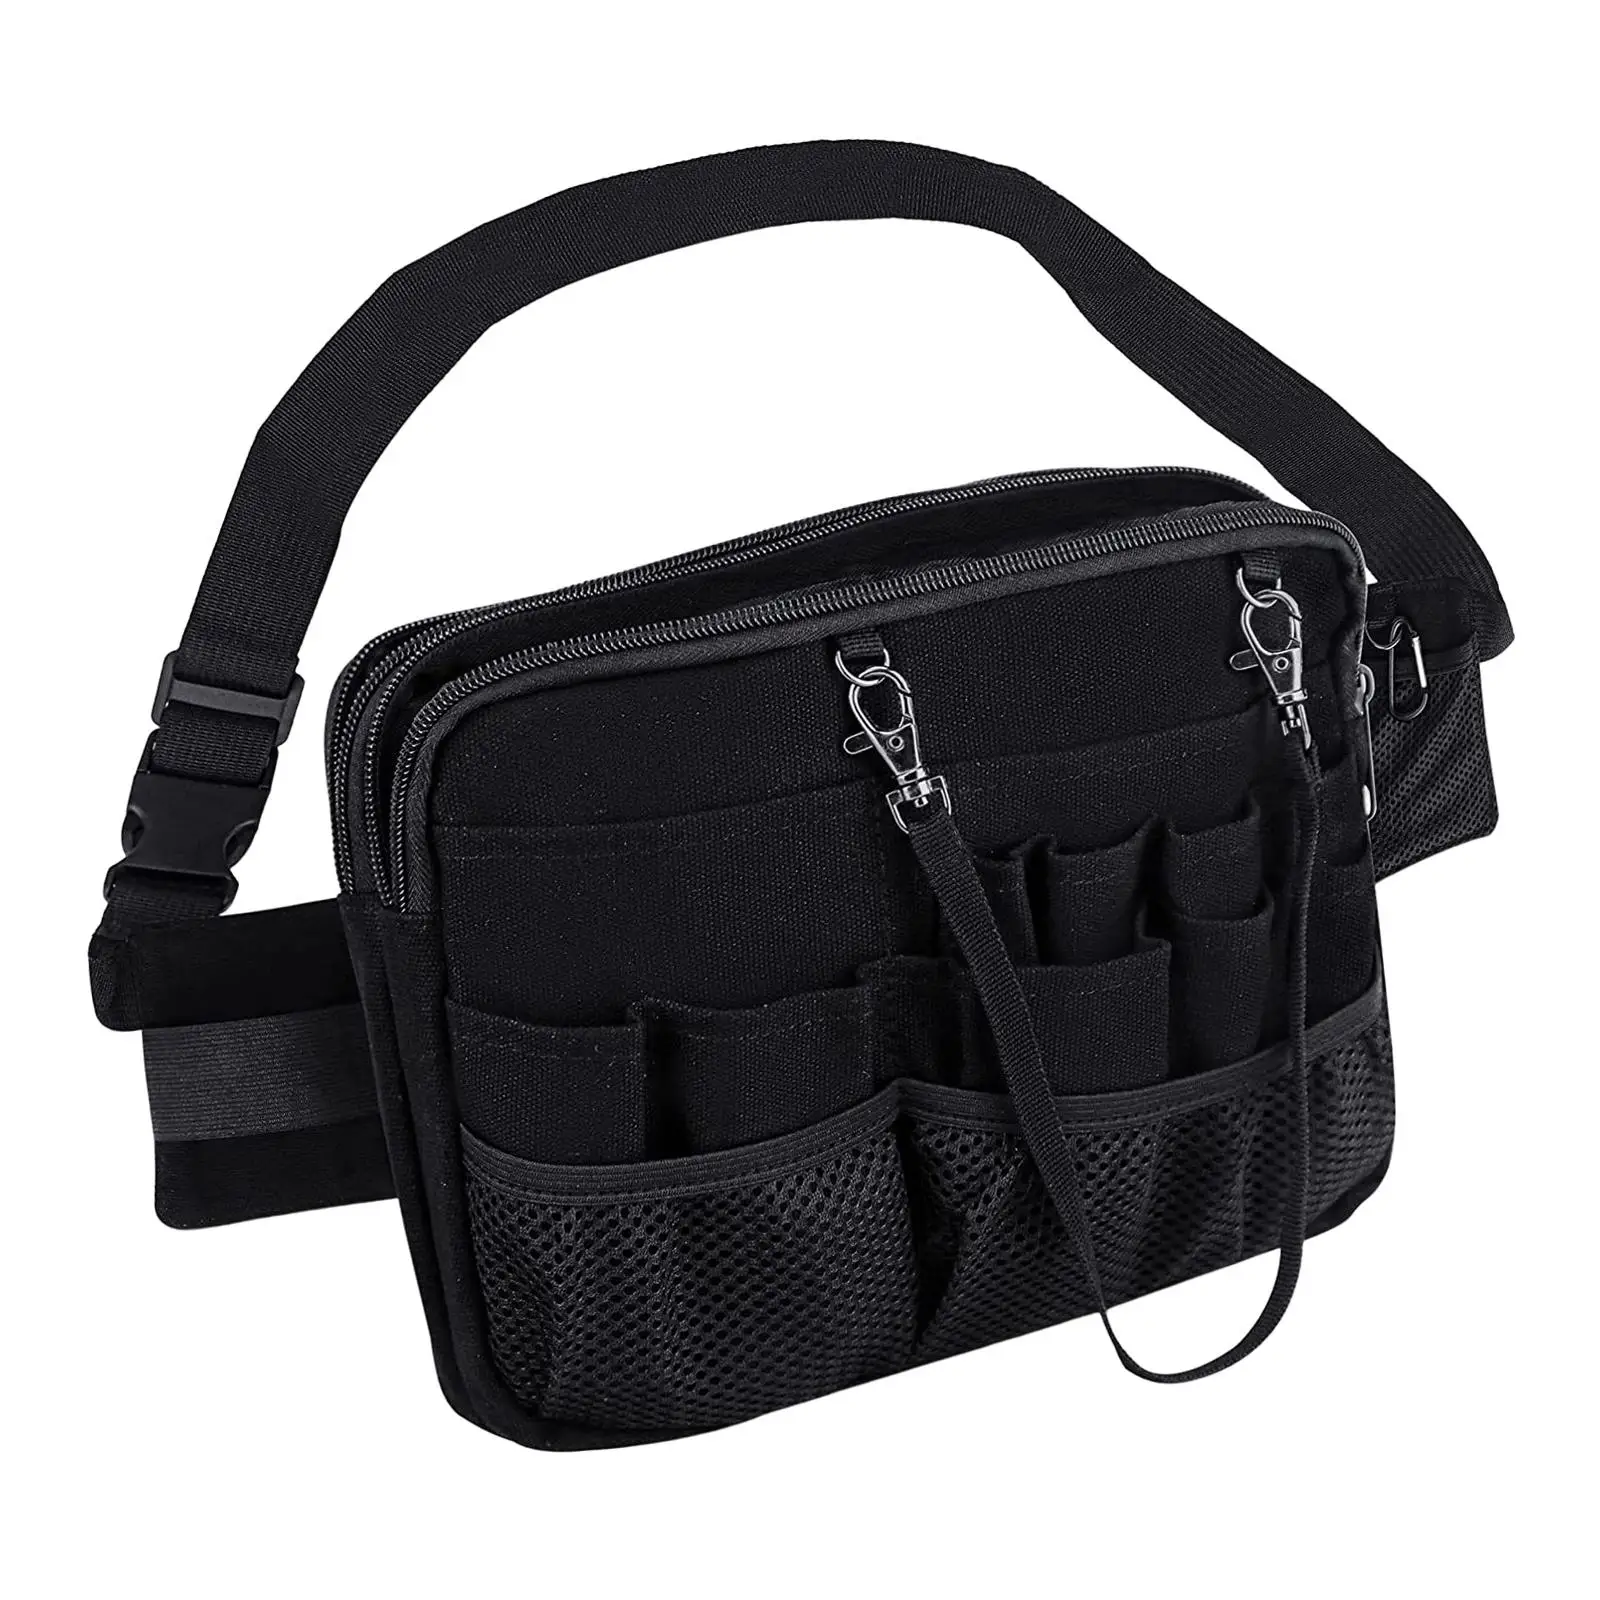  Fanny Pack Organizer Nursing Tool Bag Multiple Pockets Belt Bag 